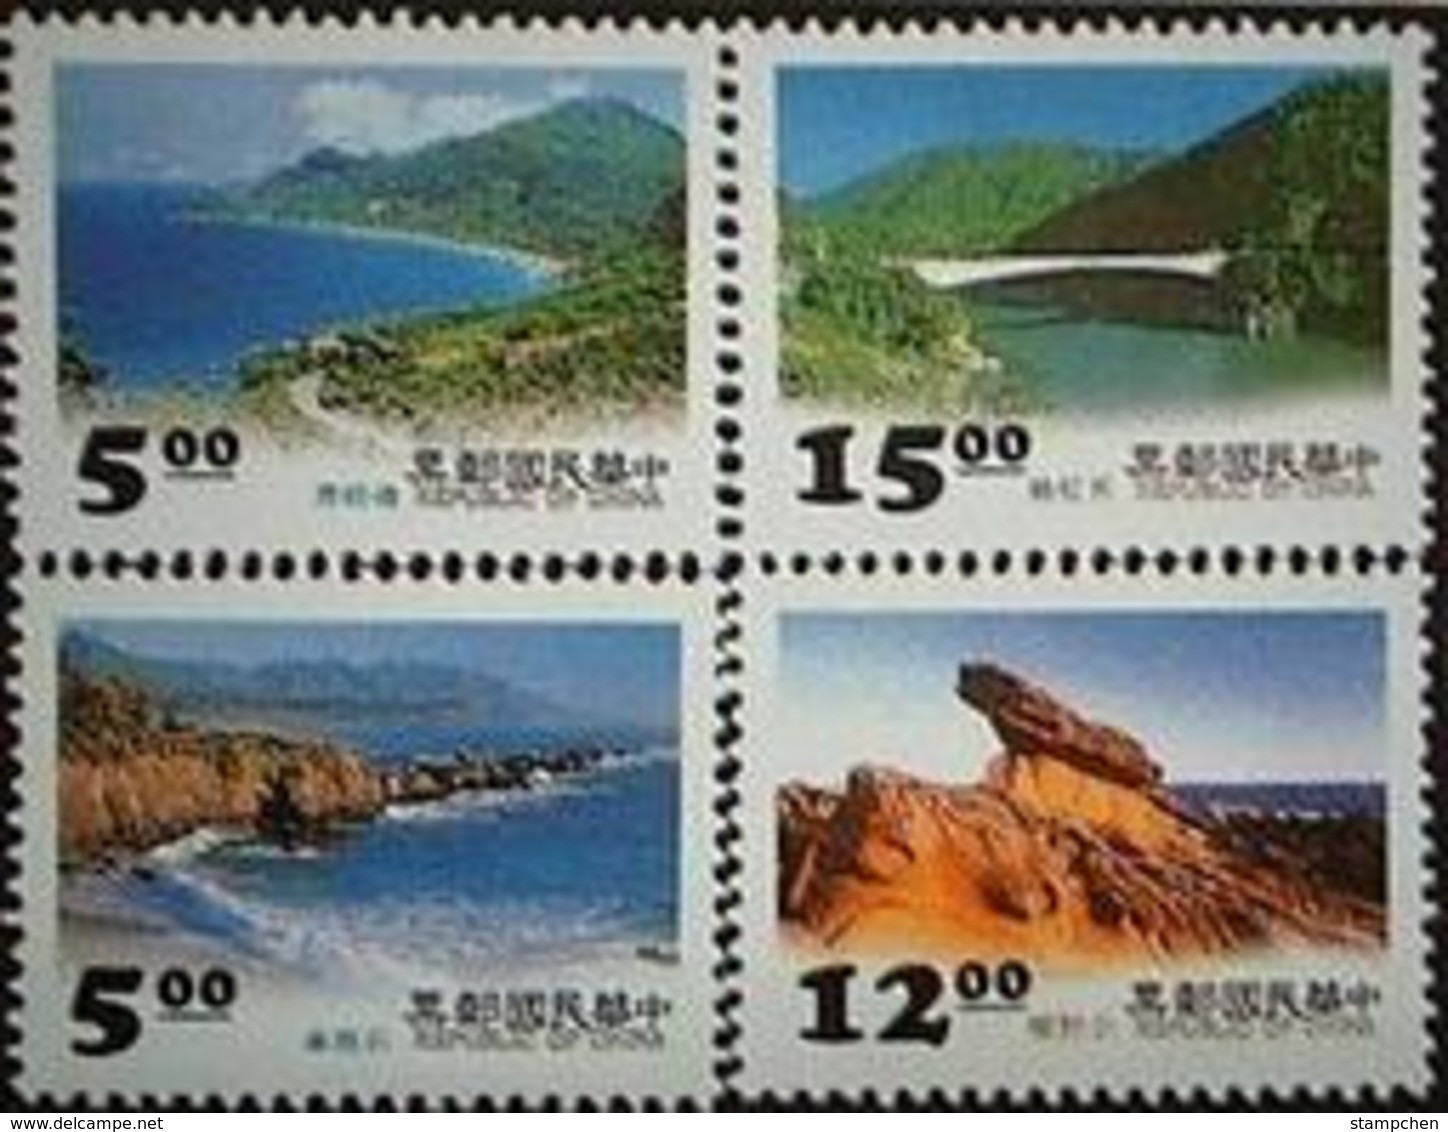 1995 East Coast Scenic Area Stamps Rock Geology Ocean Bridge Taiwan Scenery Tourism - Acqua